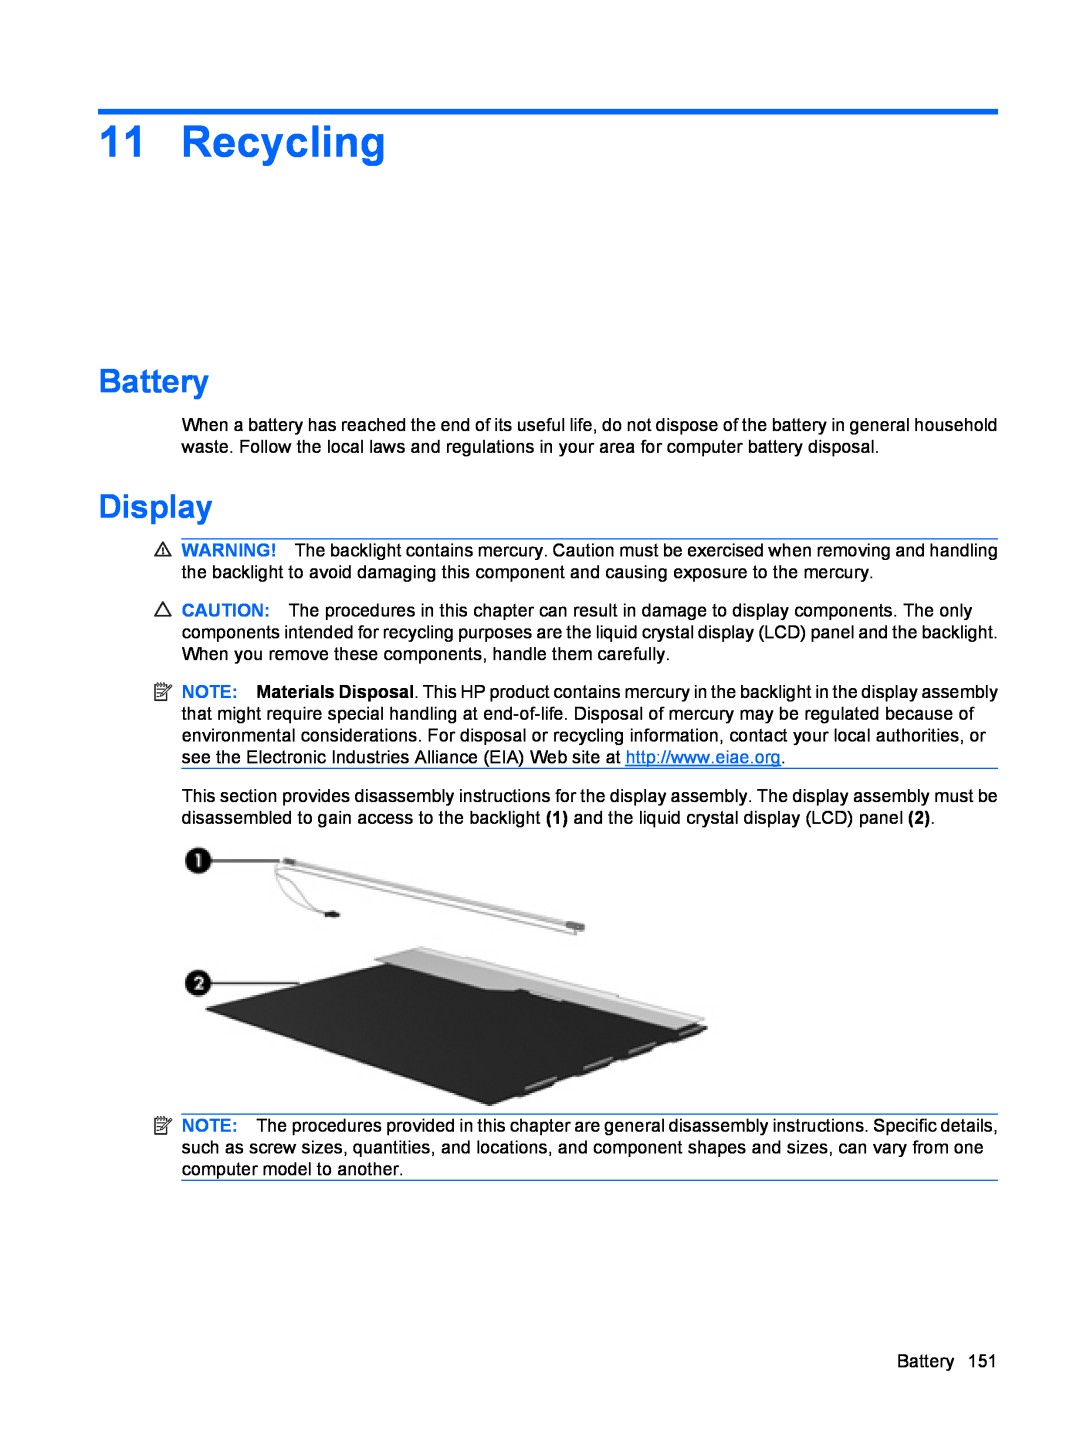 HP DV6 manual Recycling, Battery, Display 